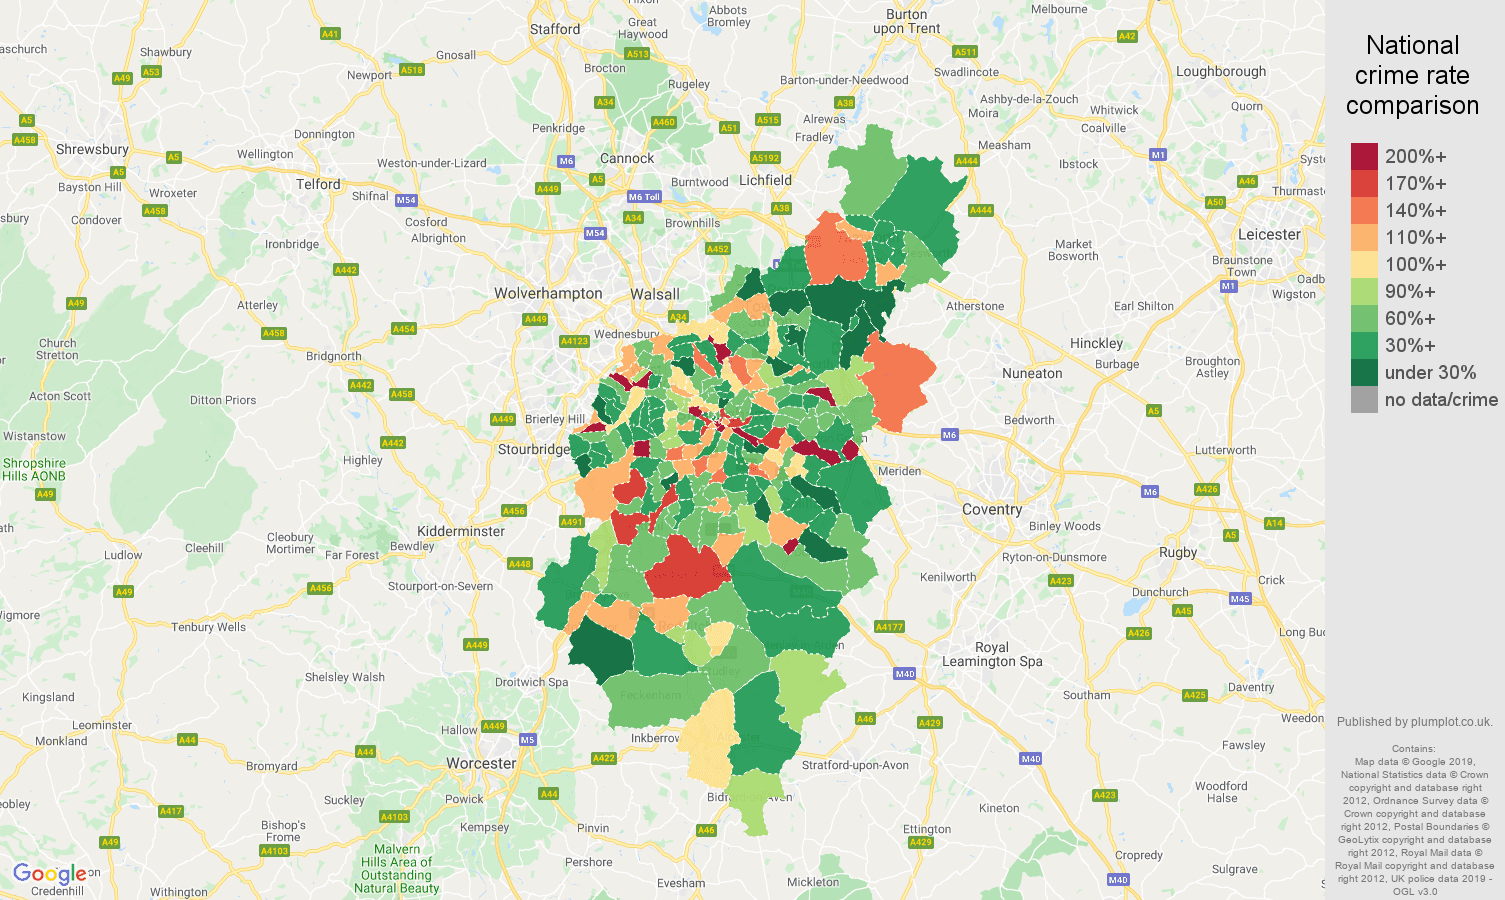 Birmingham other theft crime rate comparison map